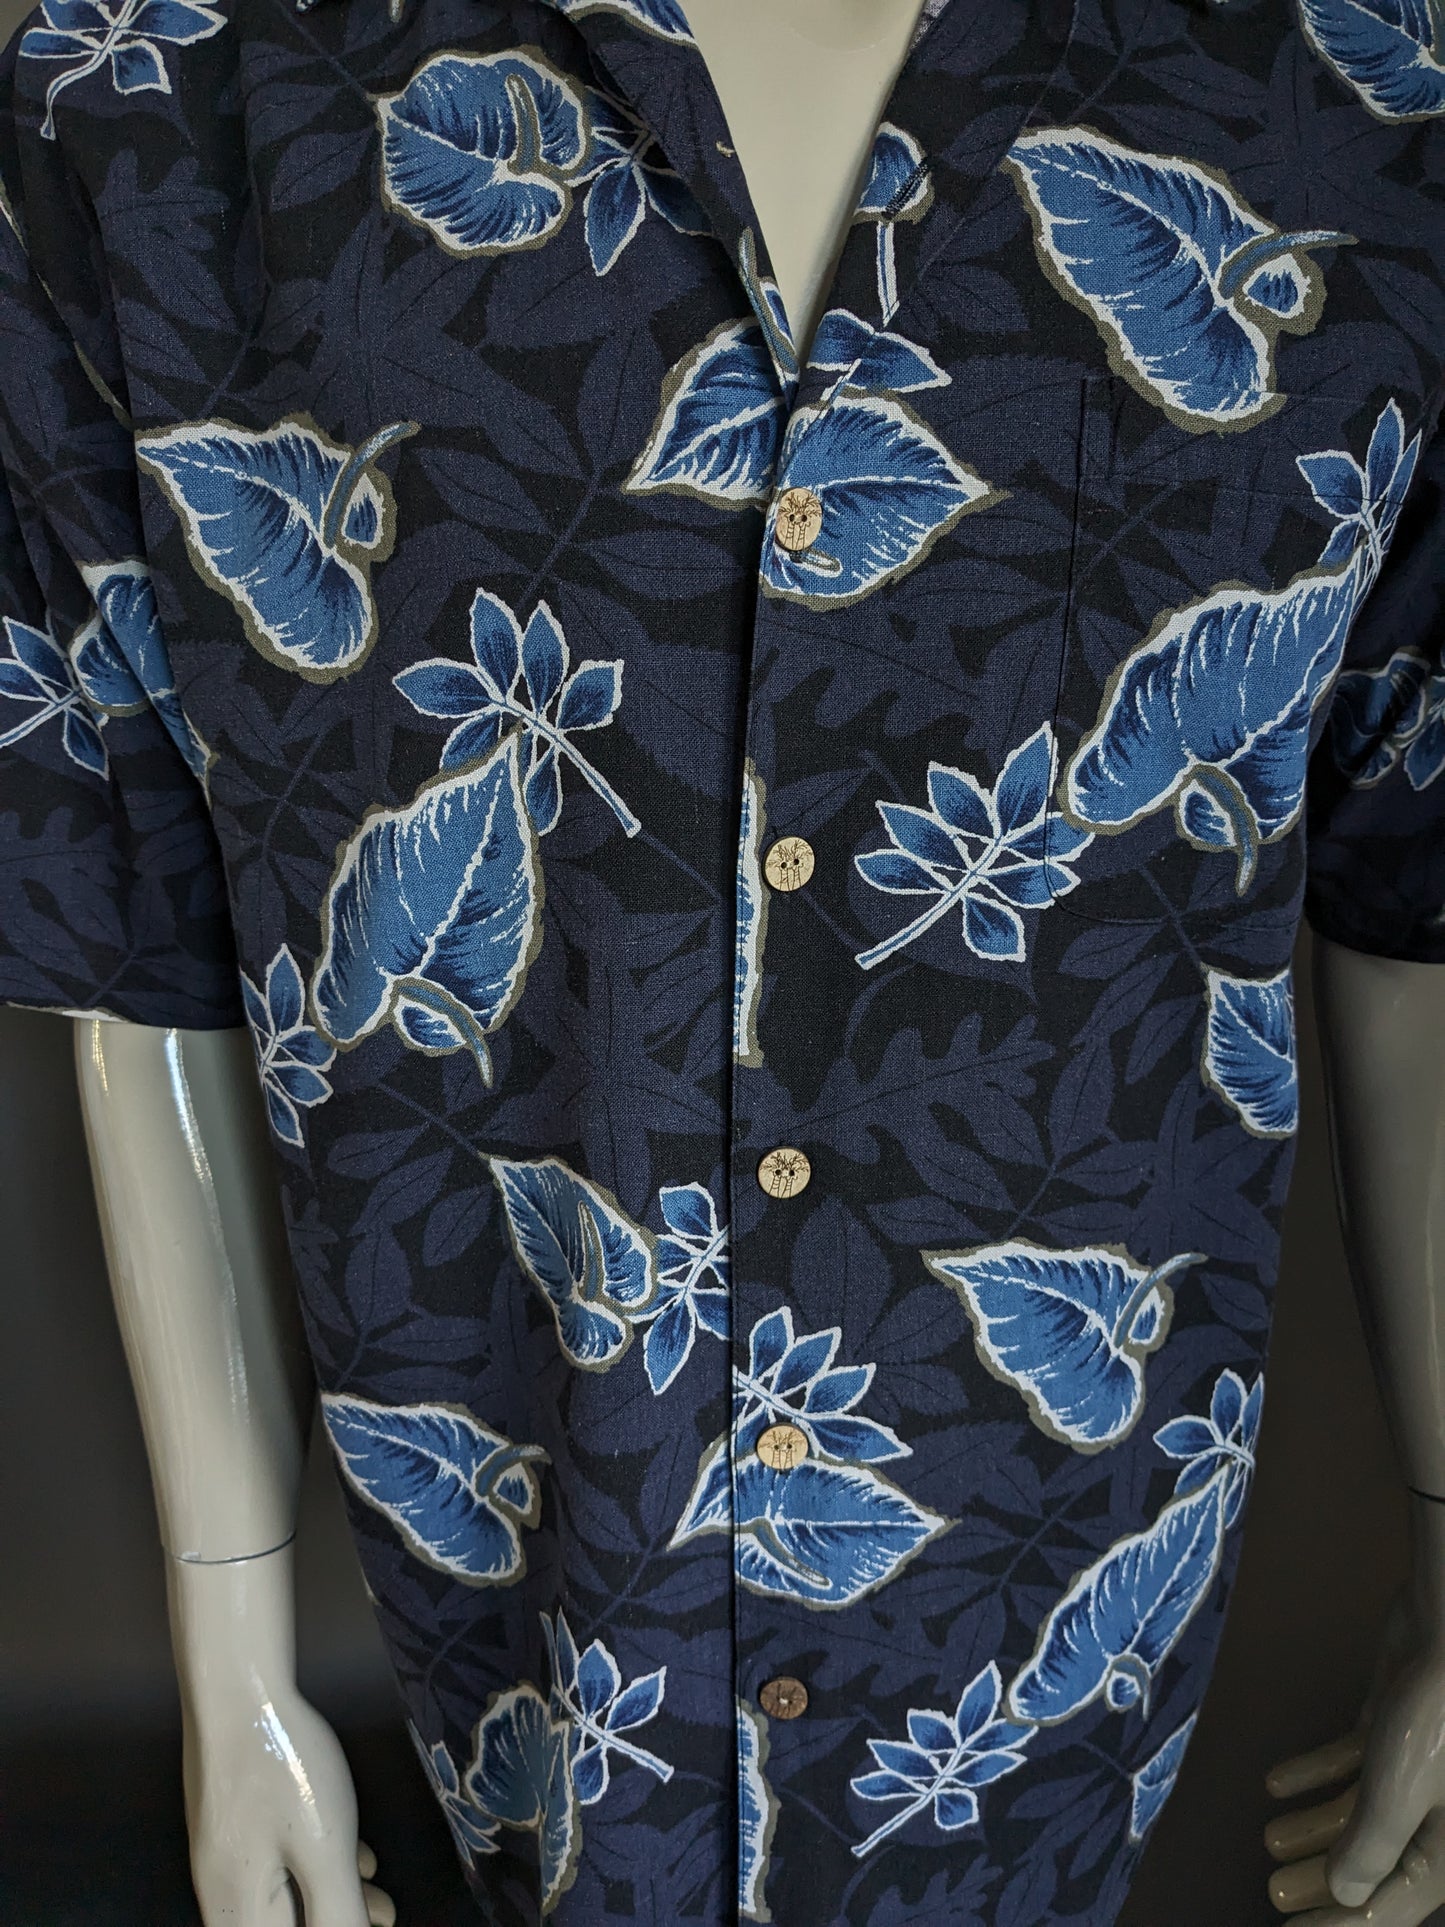 Paradise Blue Silk Hawaii Shirt Short Sleeve. Blue leaf motif. Size XL. 70% silk.